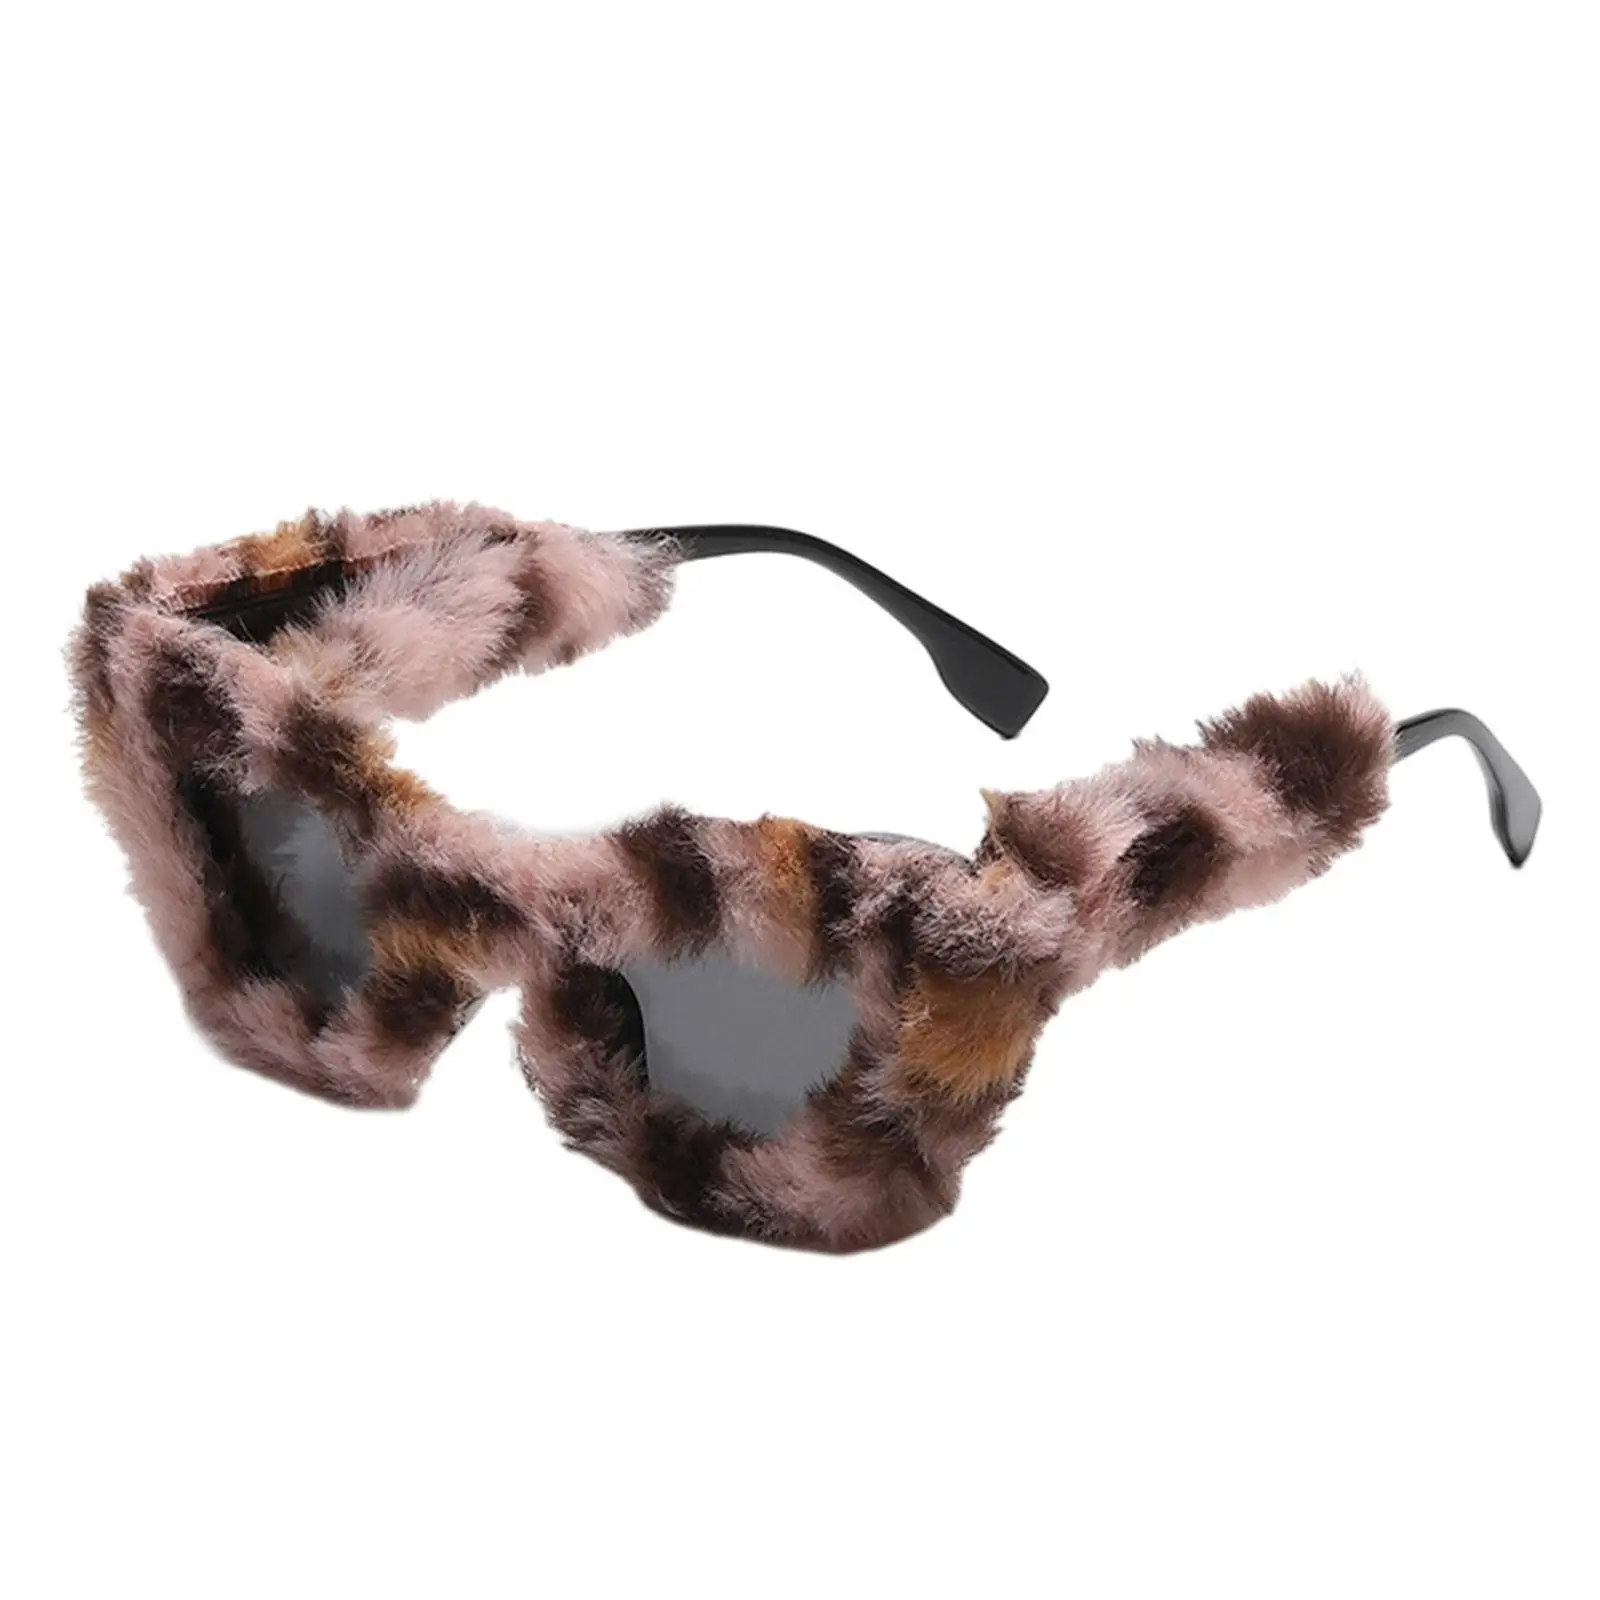 Plush Fuzzy Sunglasses Soft Eyewear Creative Fashionable Furry Sunglasses for Travel Masquerade Holiday Photography Party